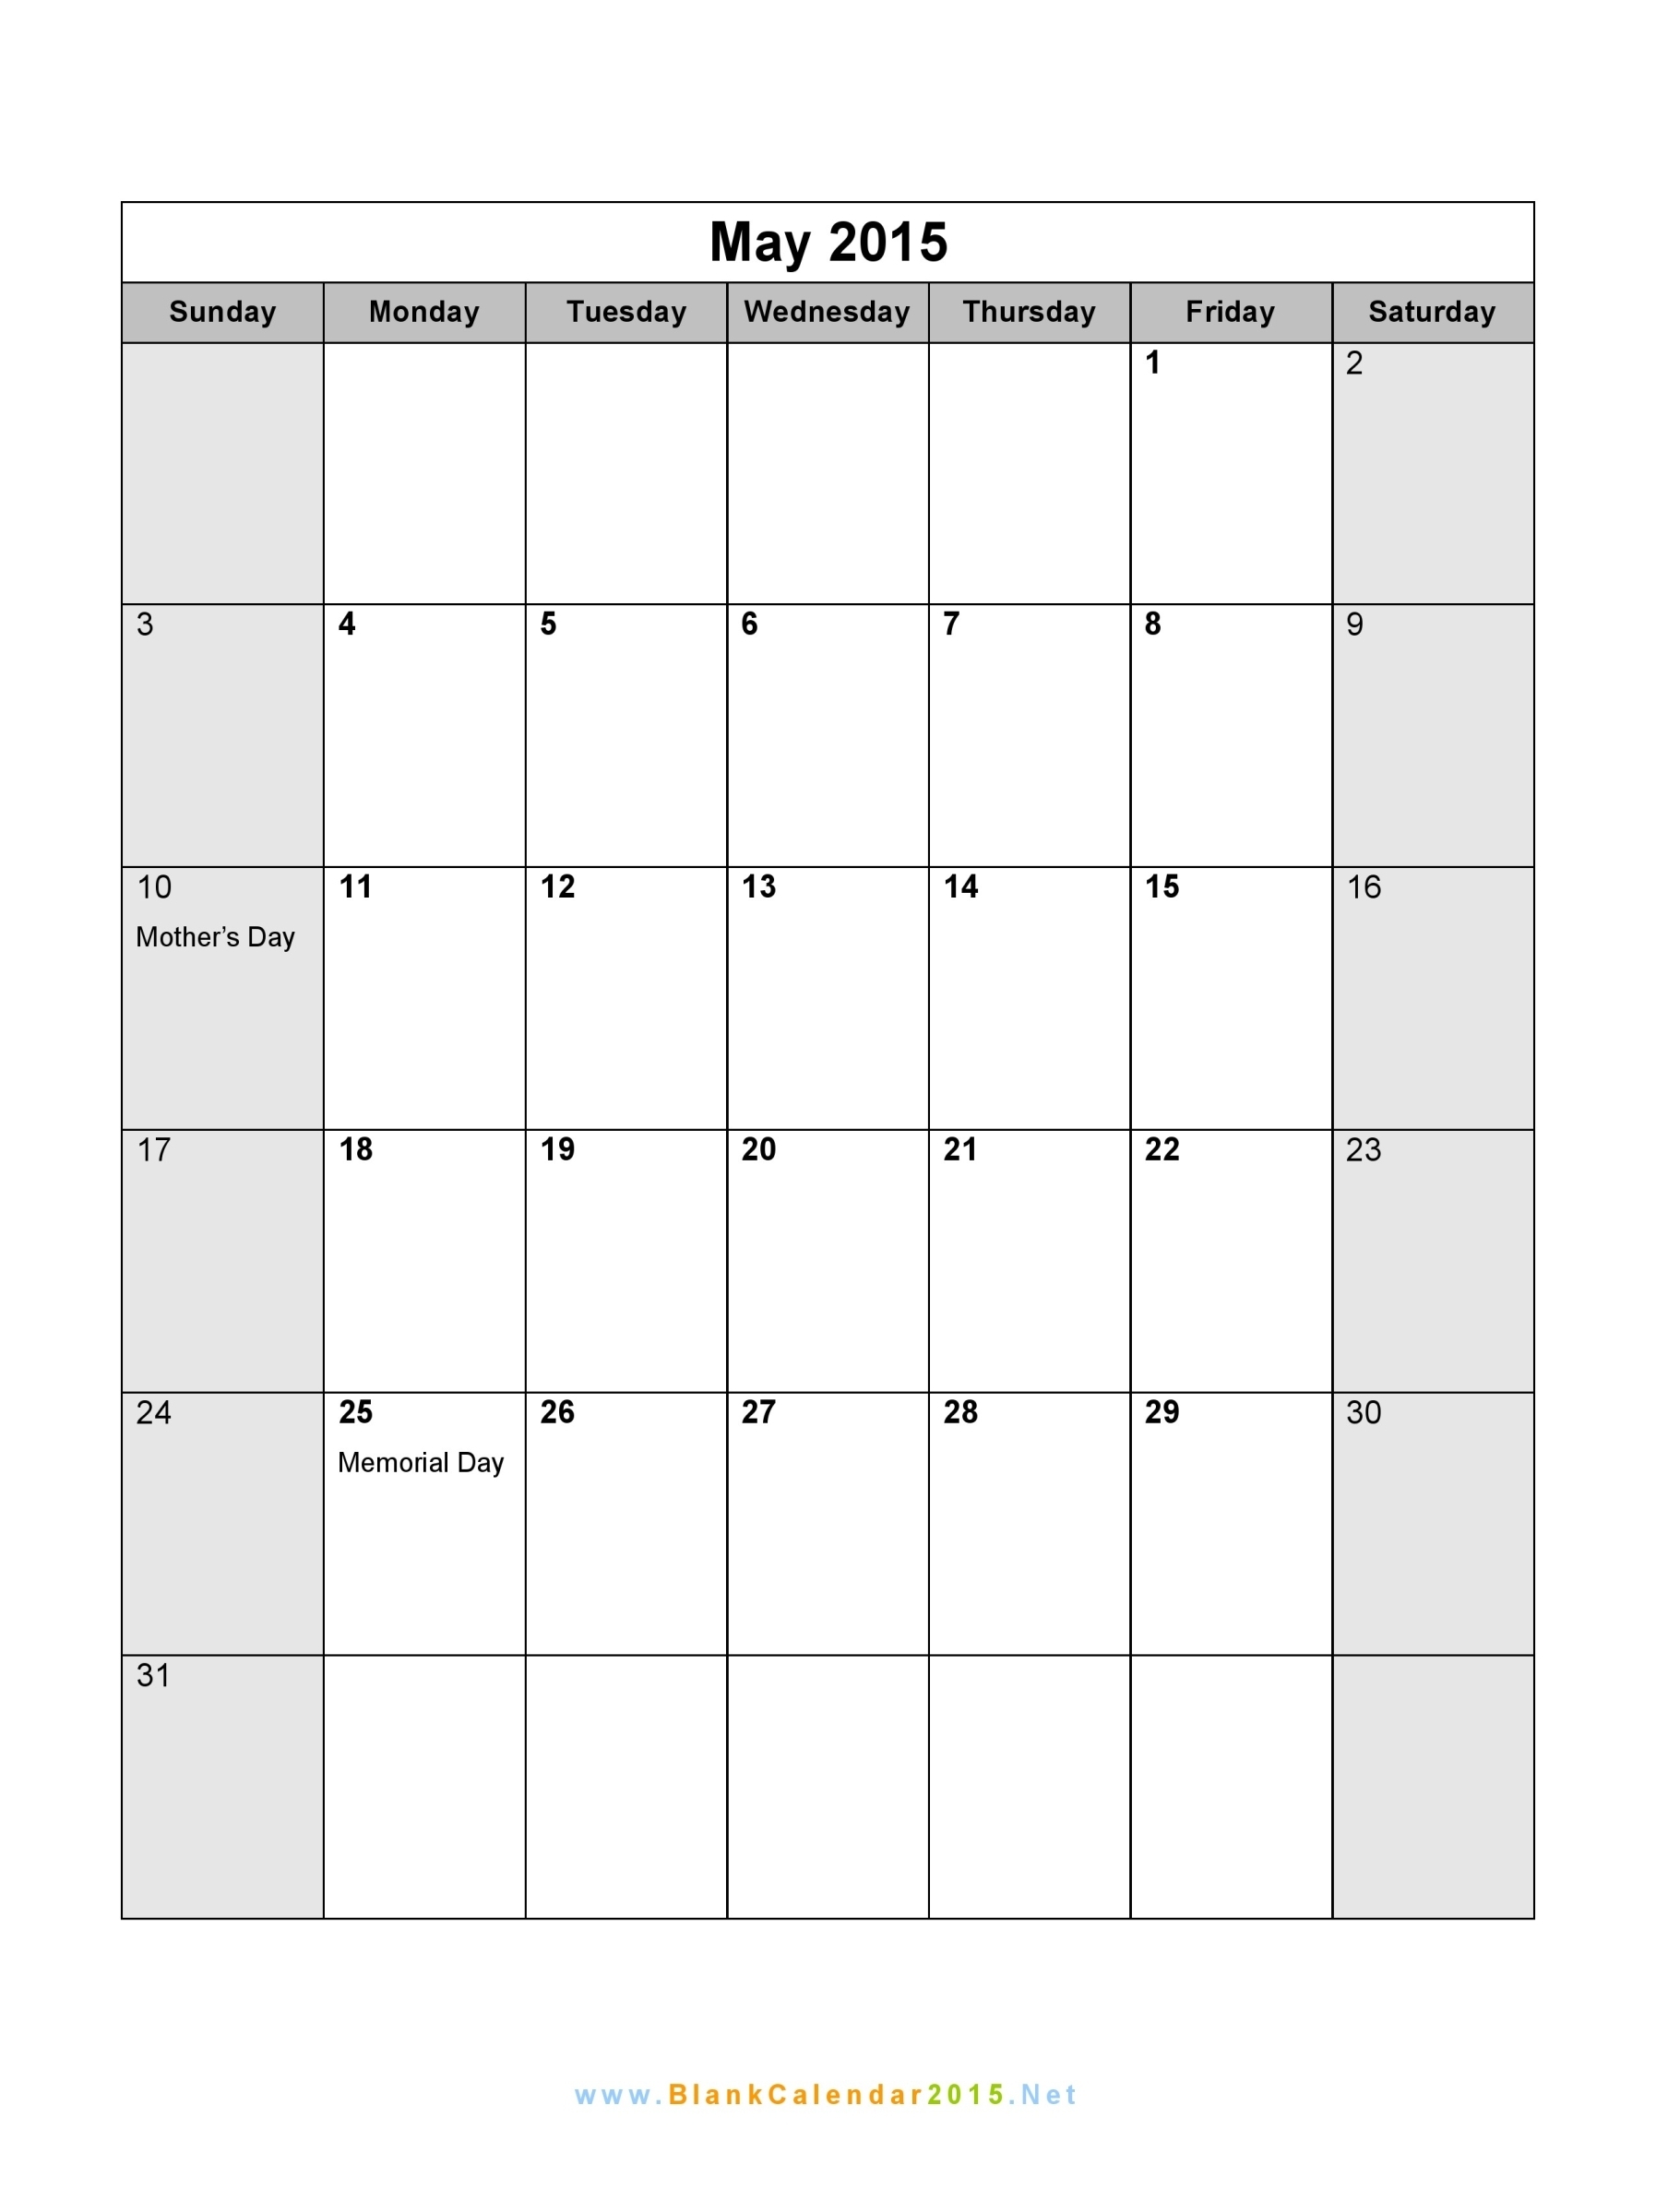 May 2015 Calendar Template Blank